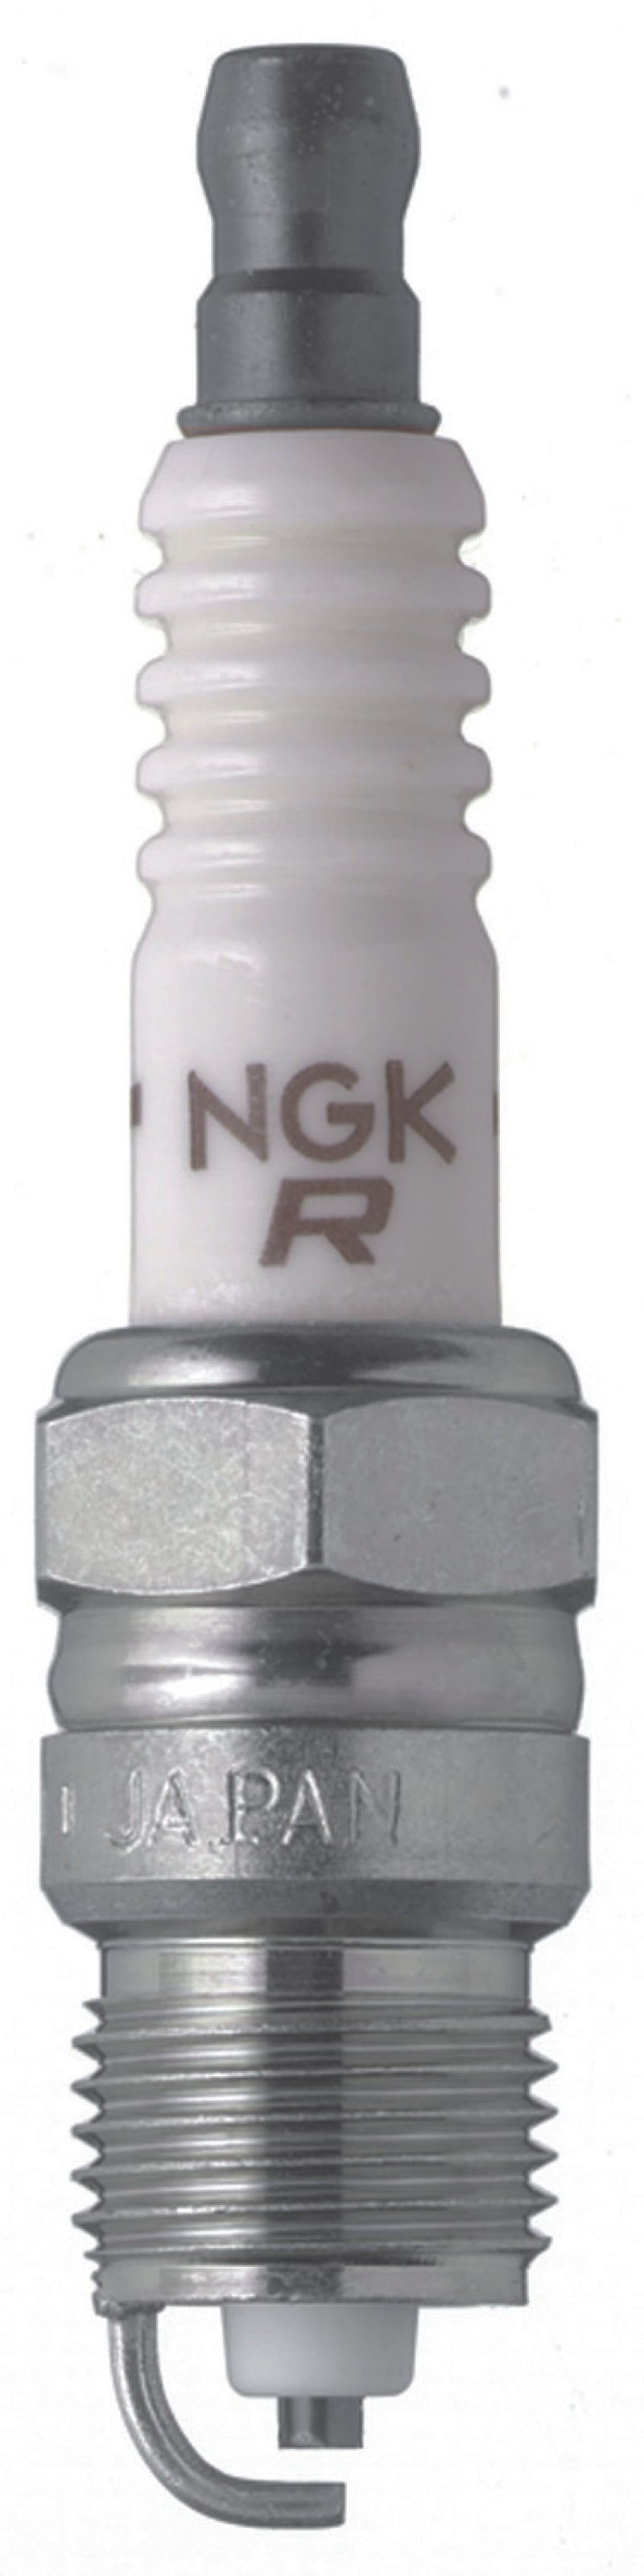 NGK V-Power Spark Plug Box of 4 (UR4) -  Shop now at Performance Car Parts